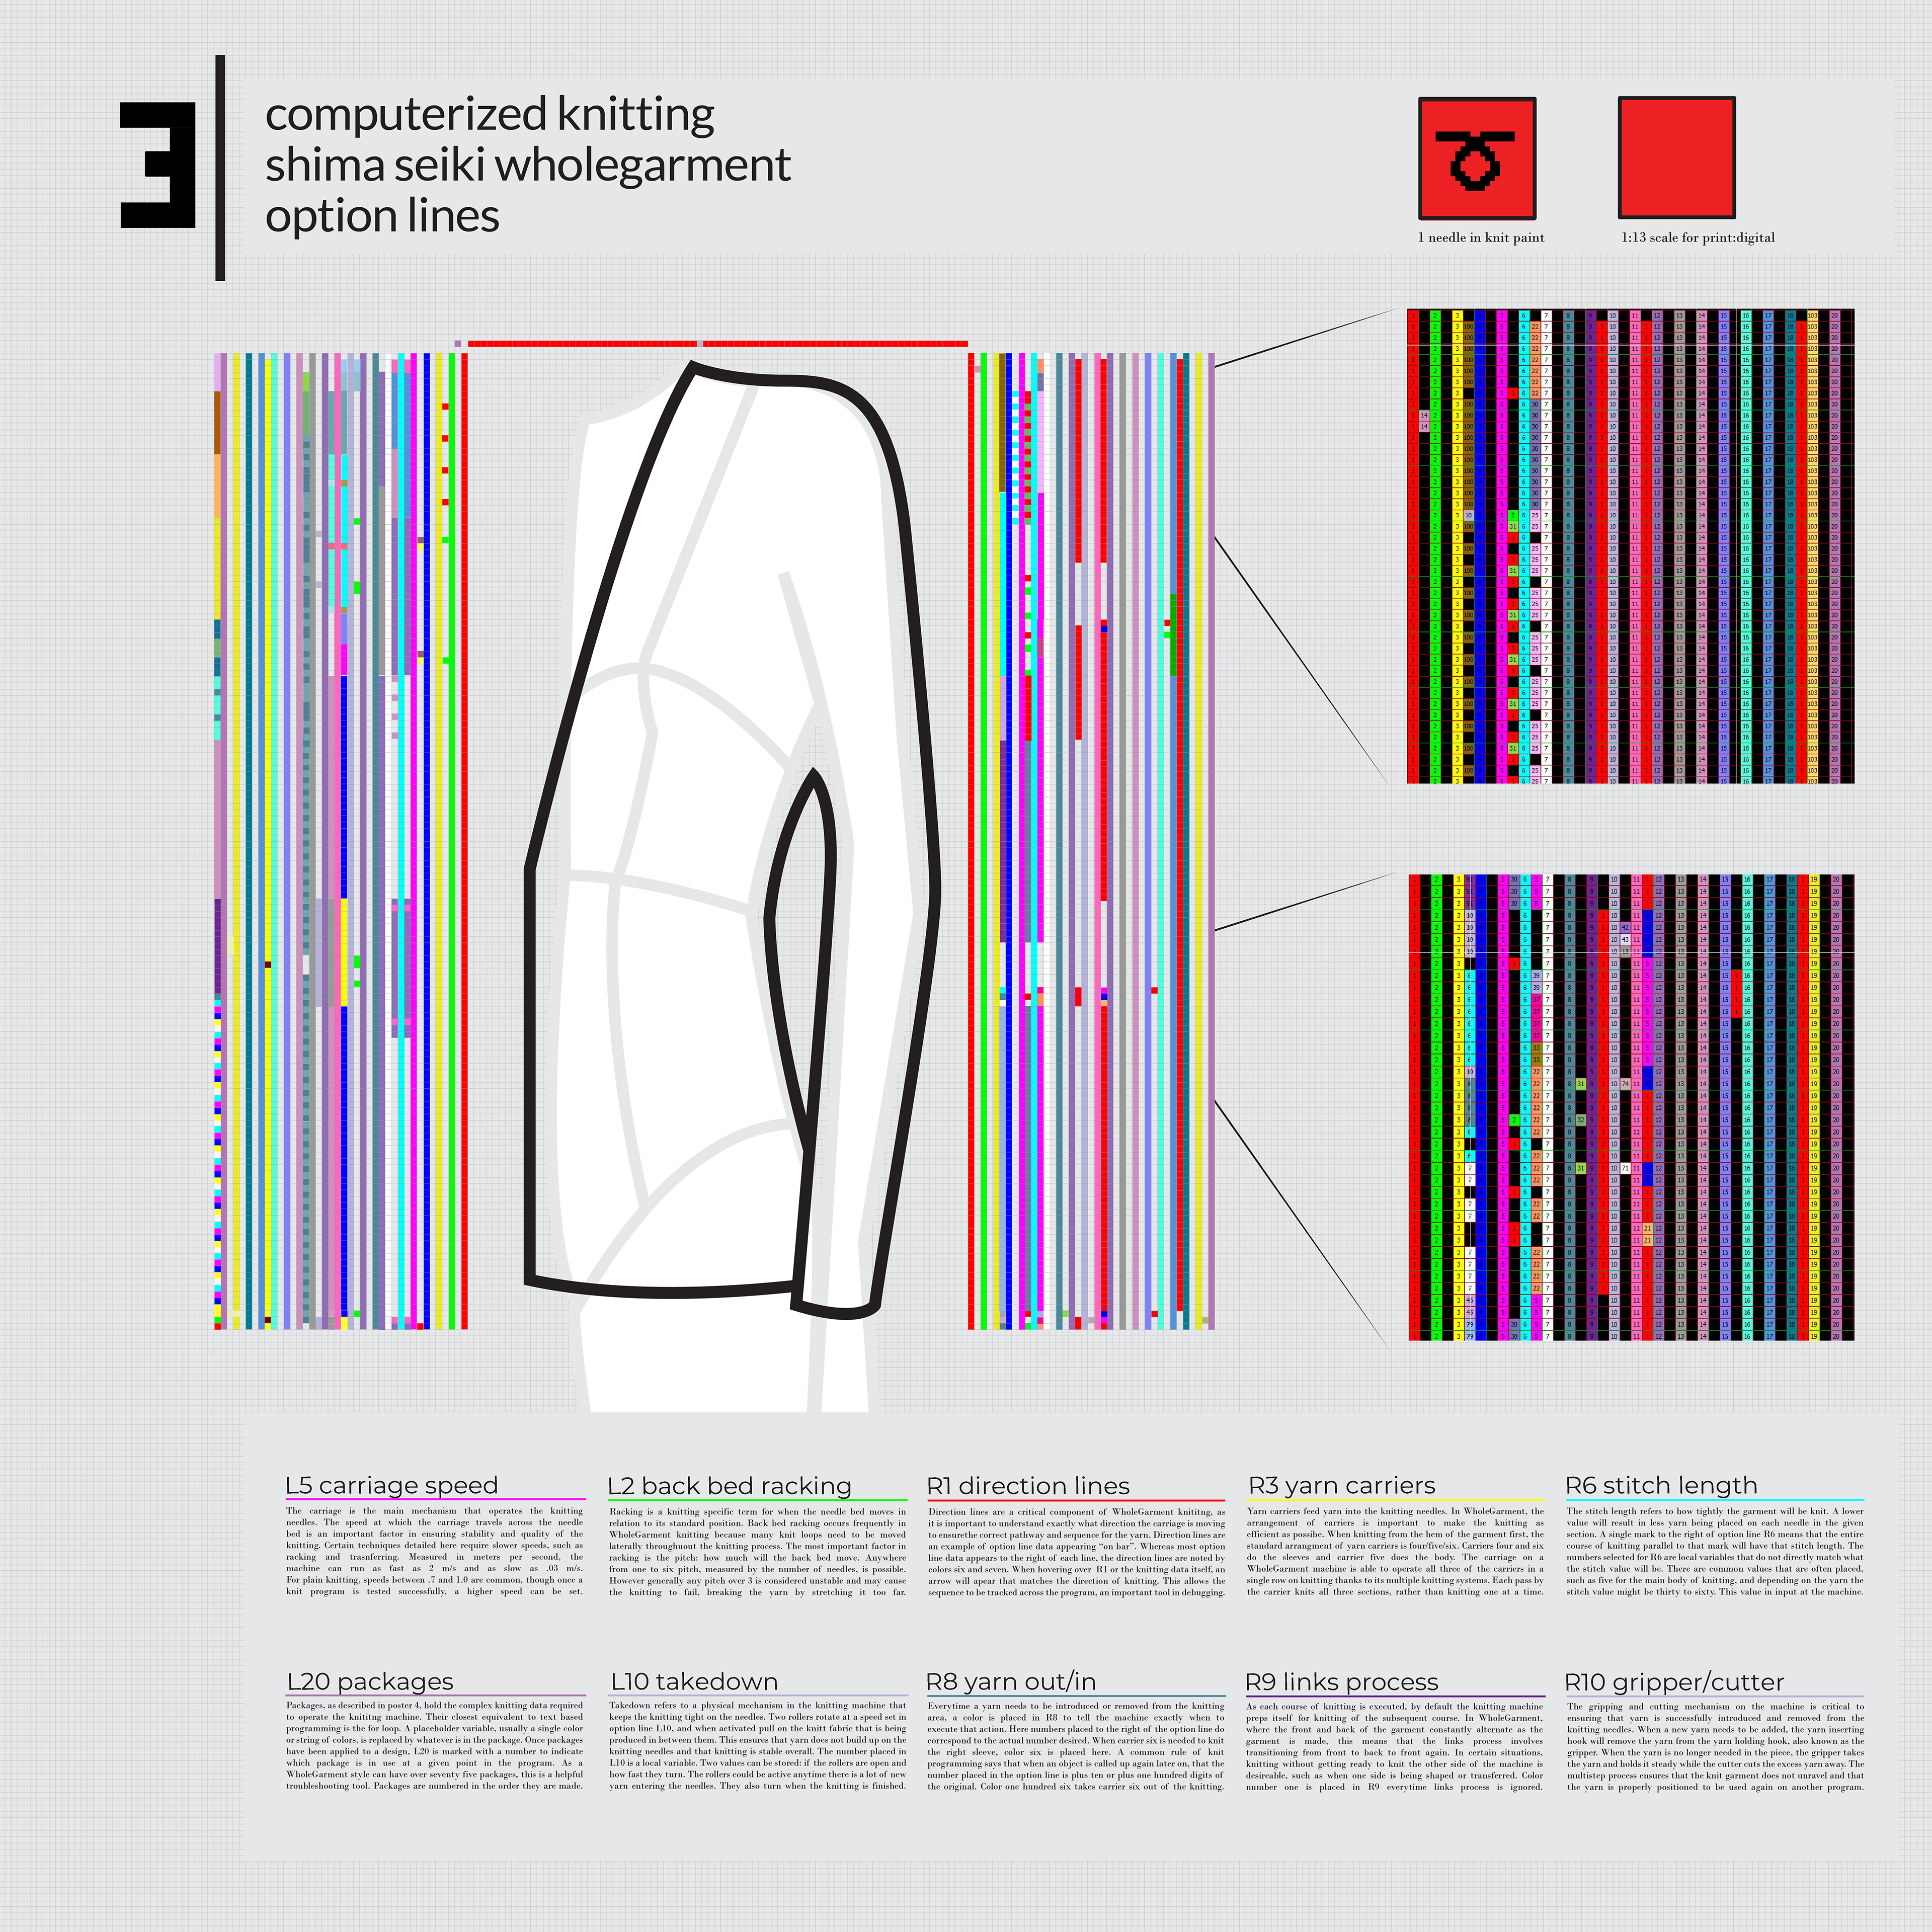 Nicholas Paganelli - Information Aesthetics - Knit Programming